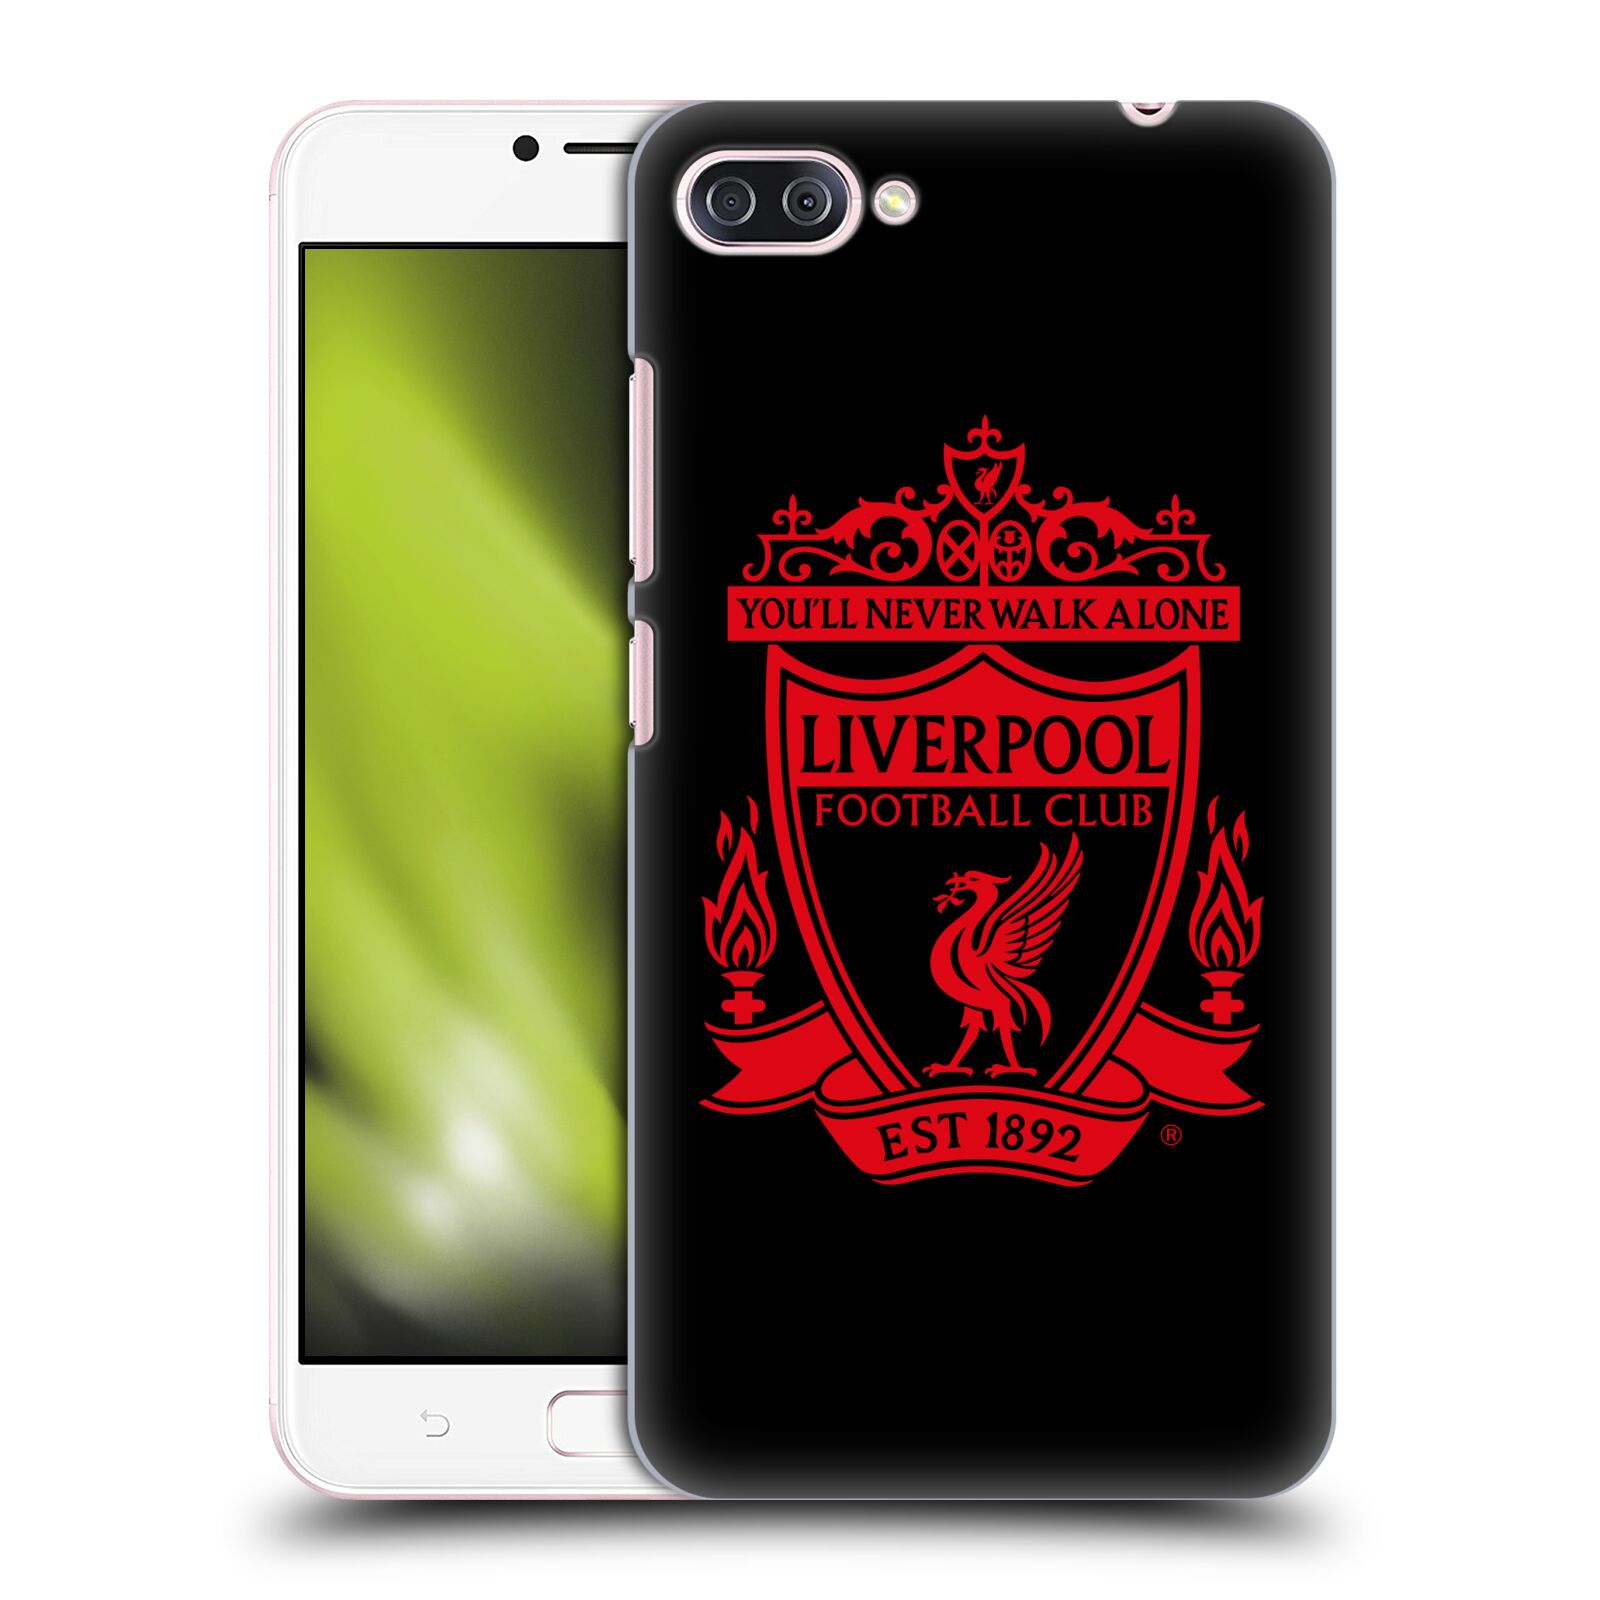 HEAD CASE plastový obal na mobil Asus Zenfone 4 MAX ZC554KL Fotbalový klub Liverpool rudý znak černé pozadí